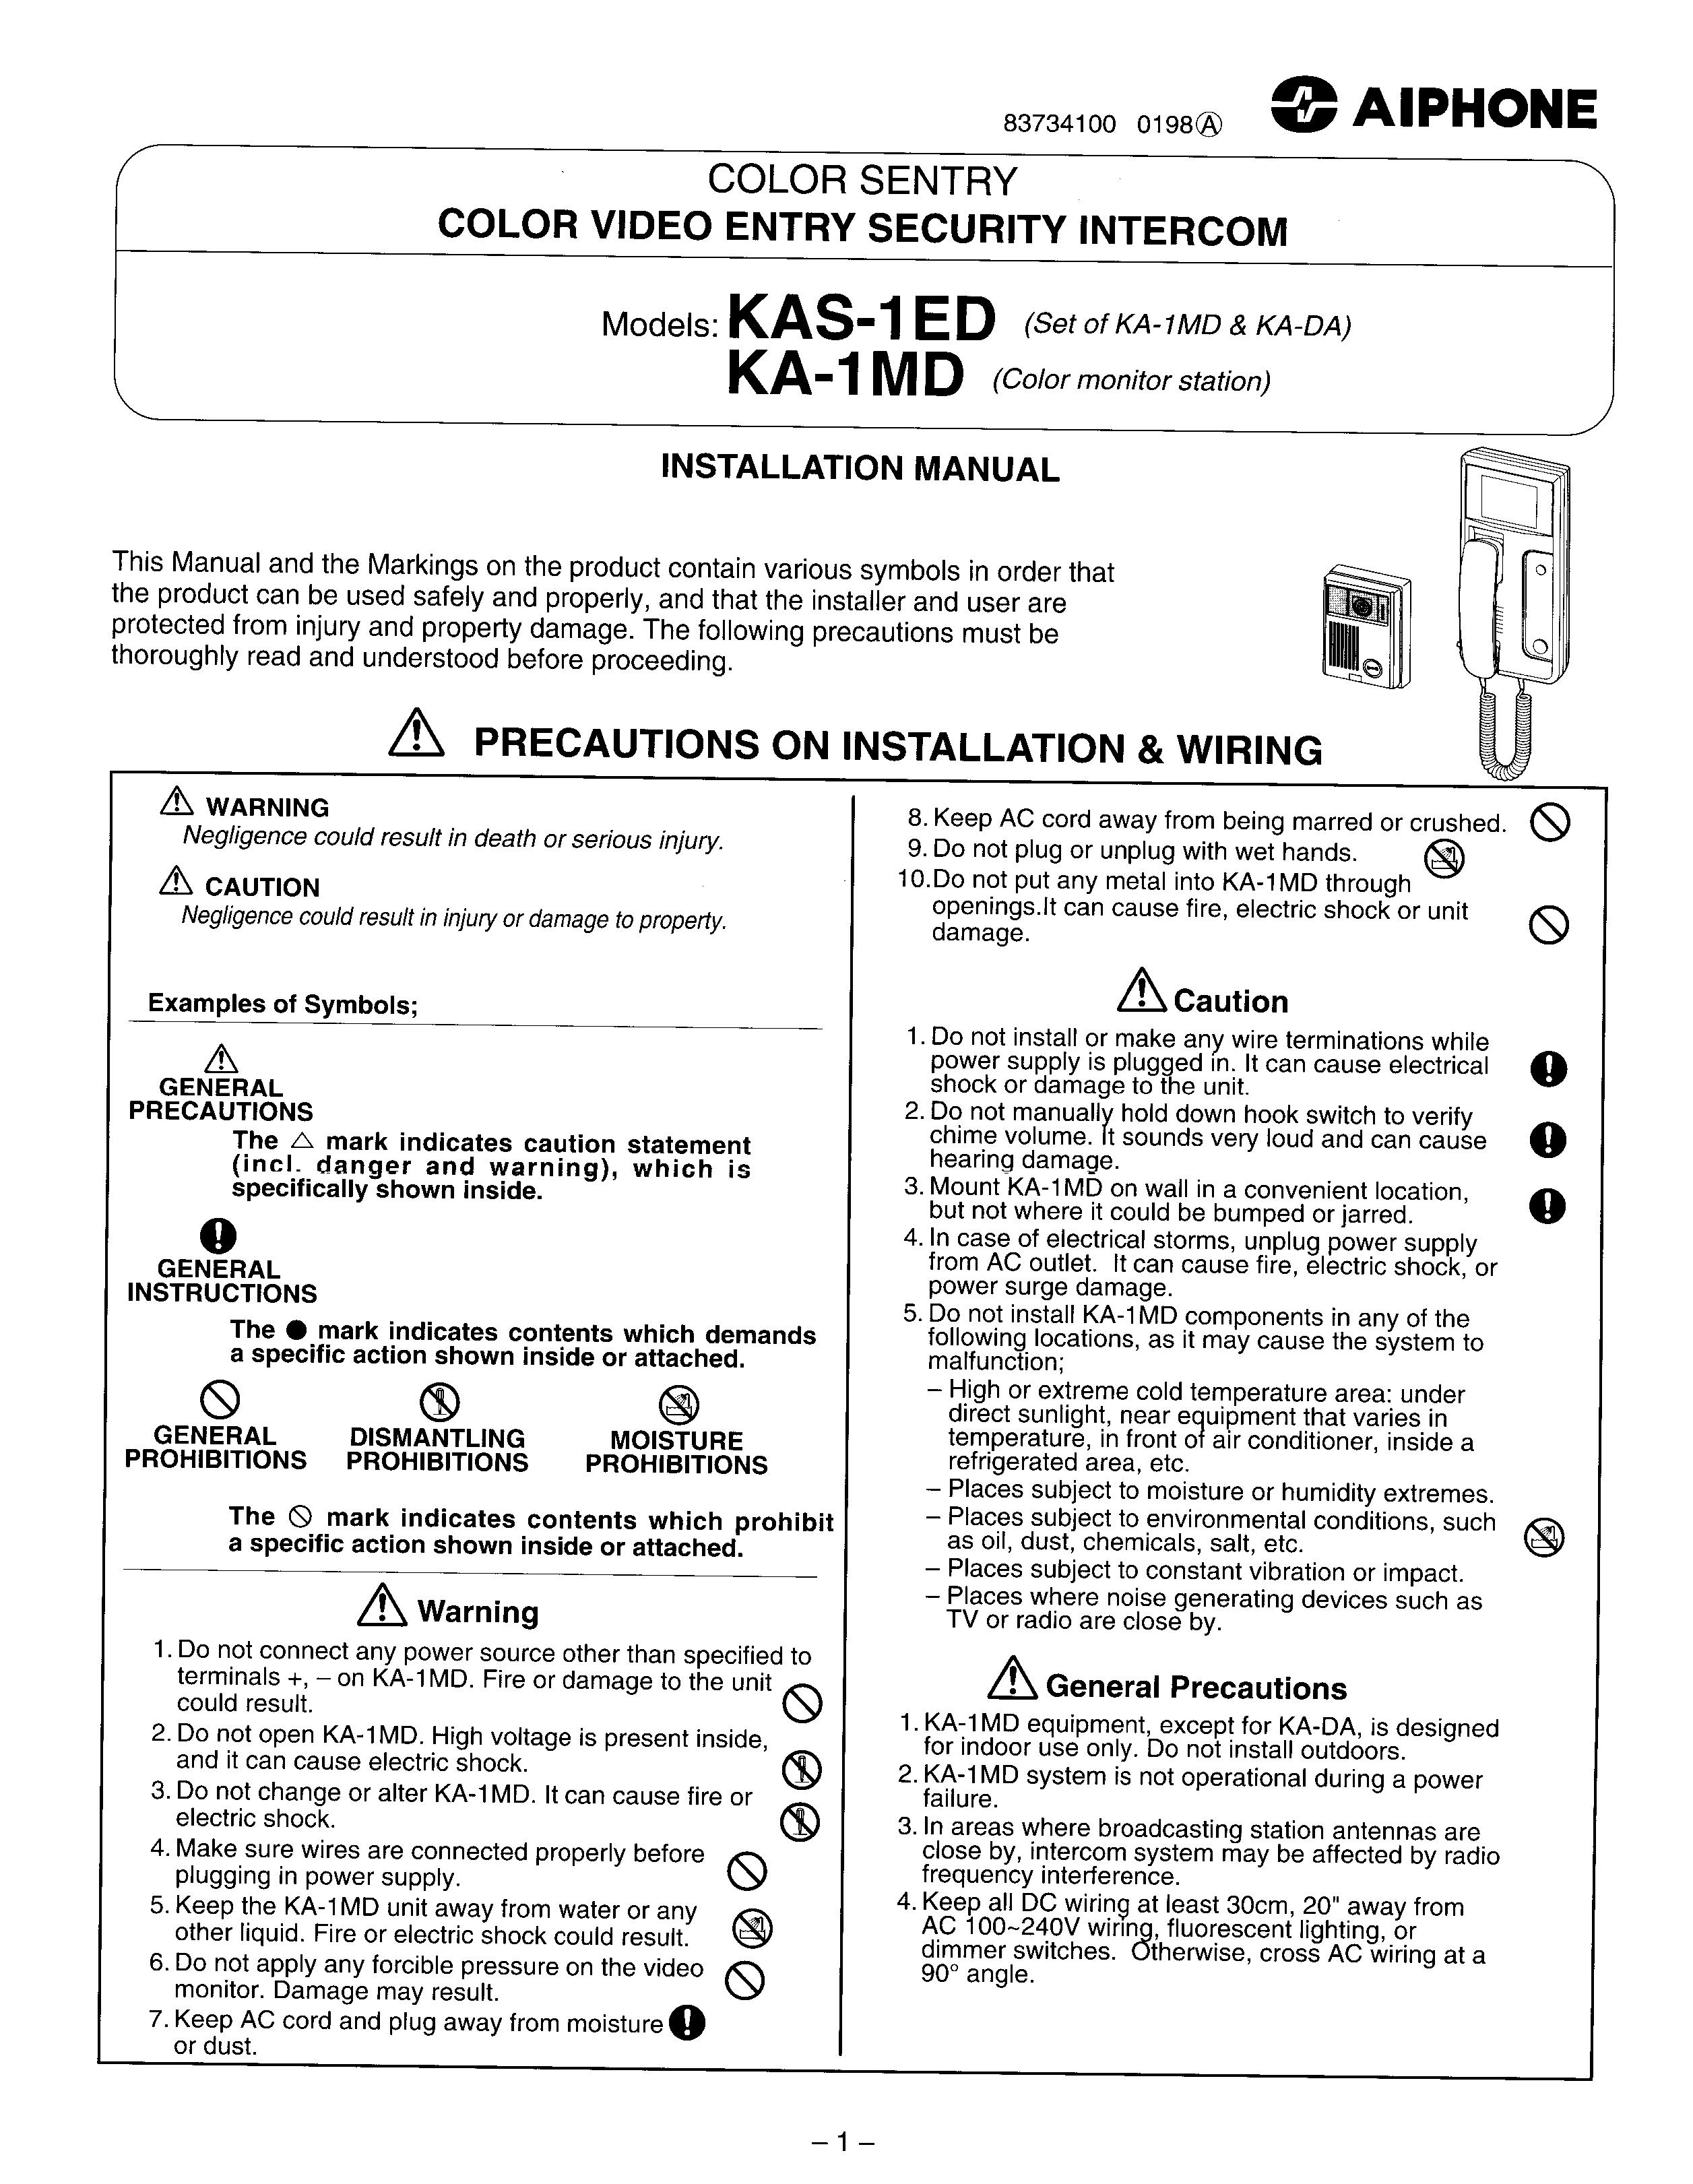 Aiphone KAS-1ED Security Camera User Manual